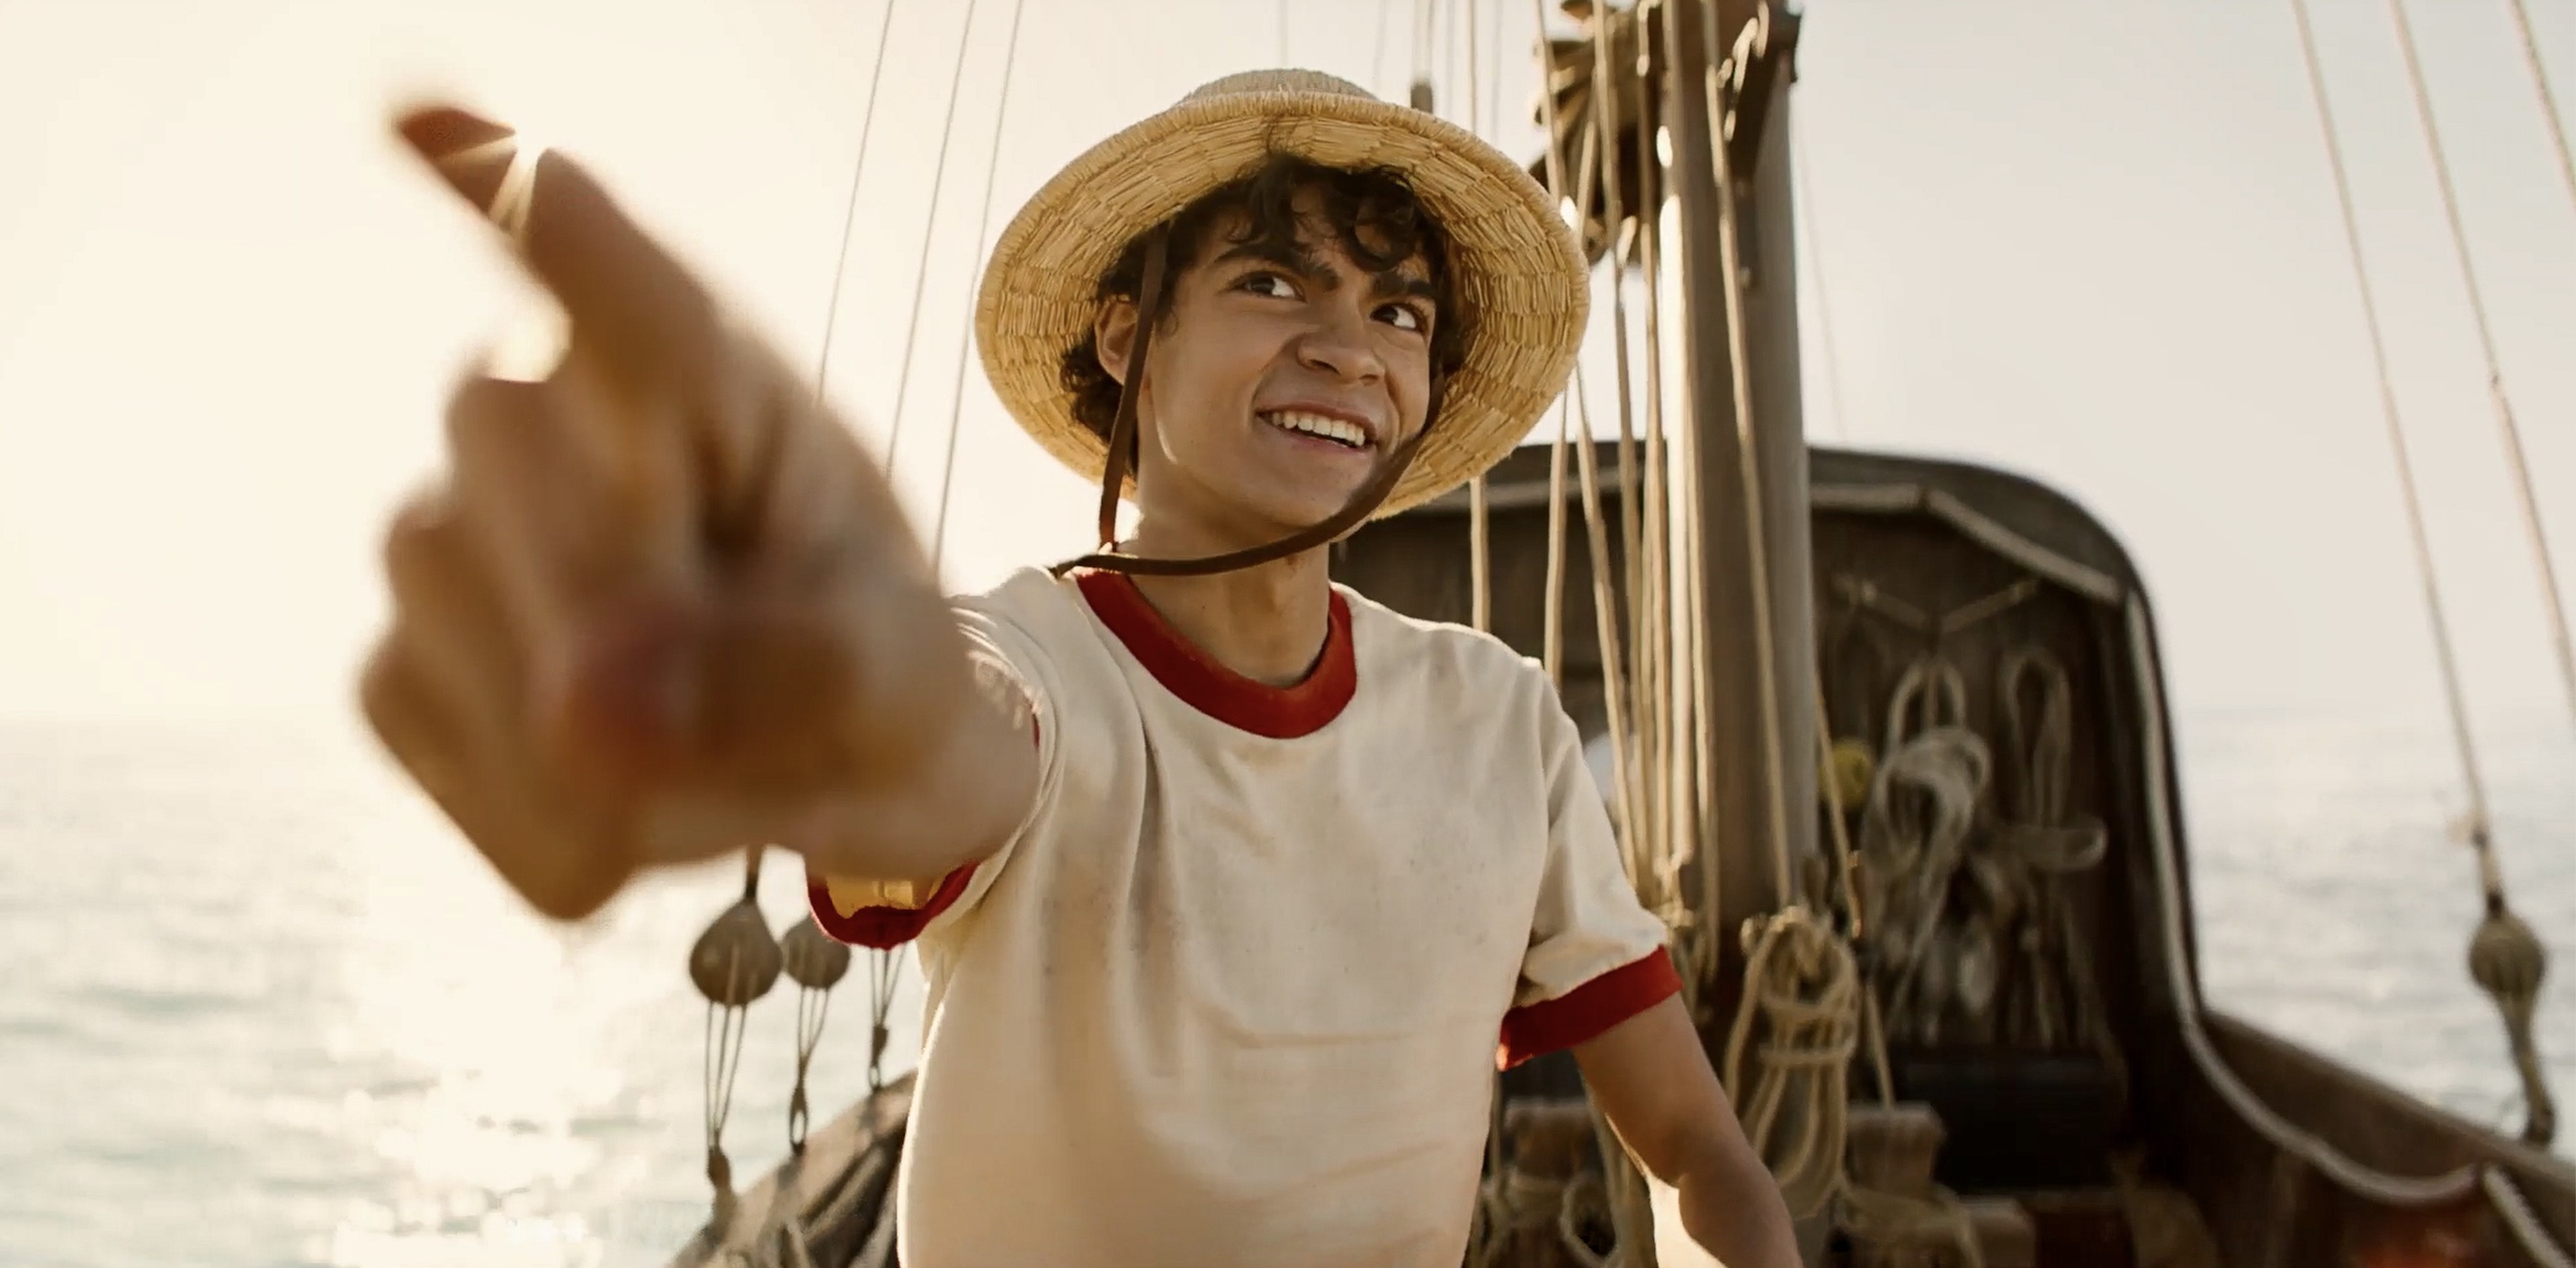 One Piece Cast on Netflix - Iñaki Godoy as Monkey D. Luffy